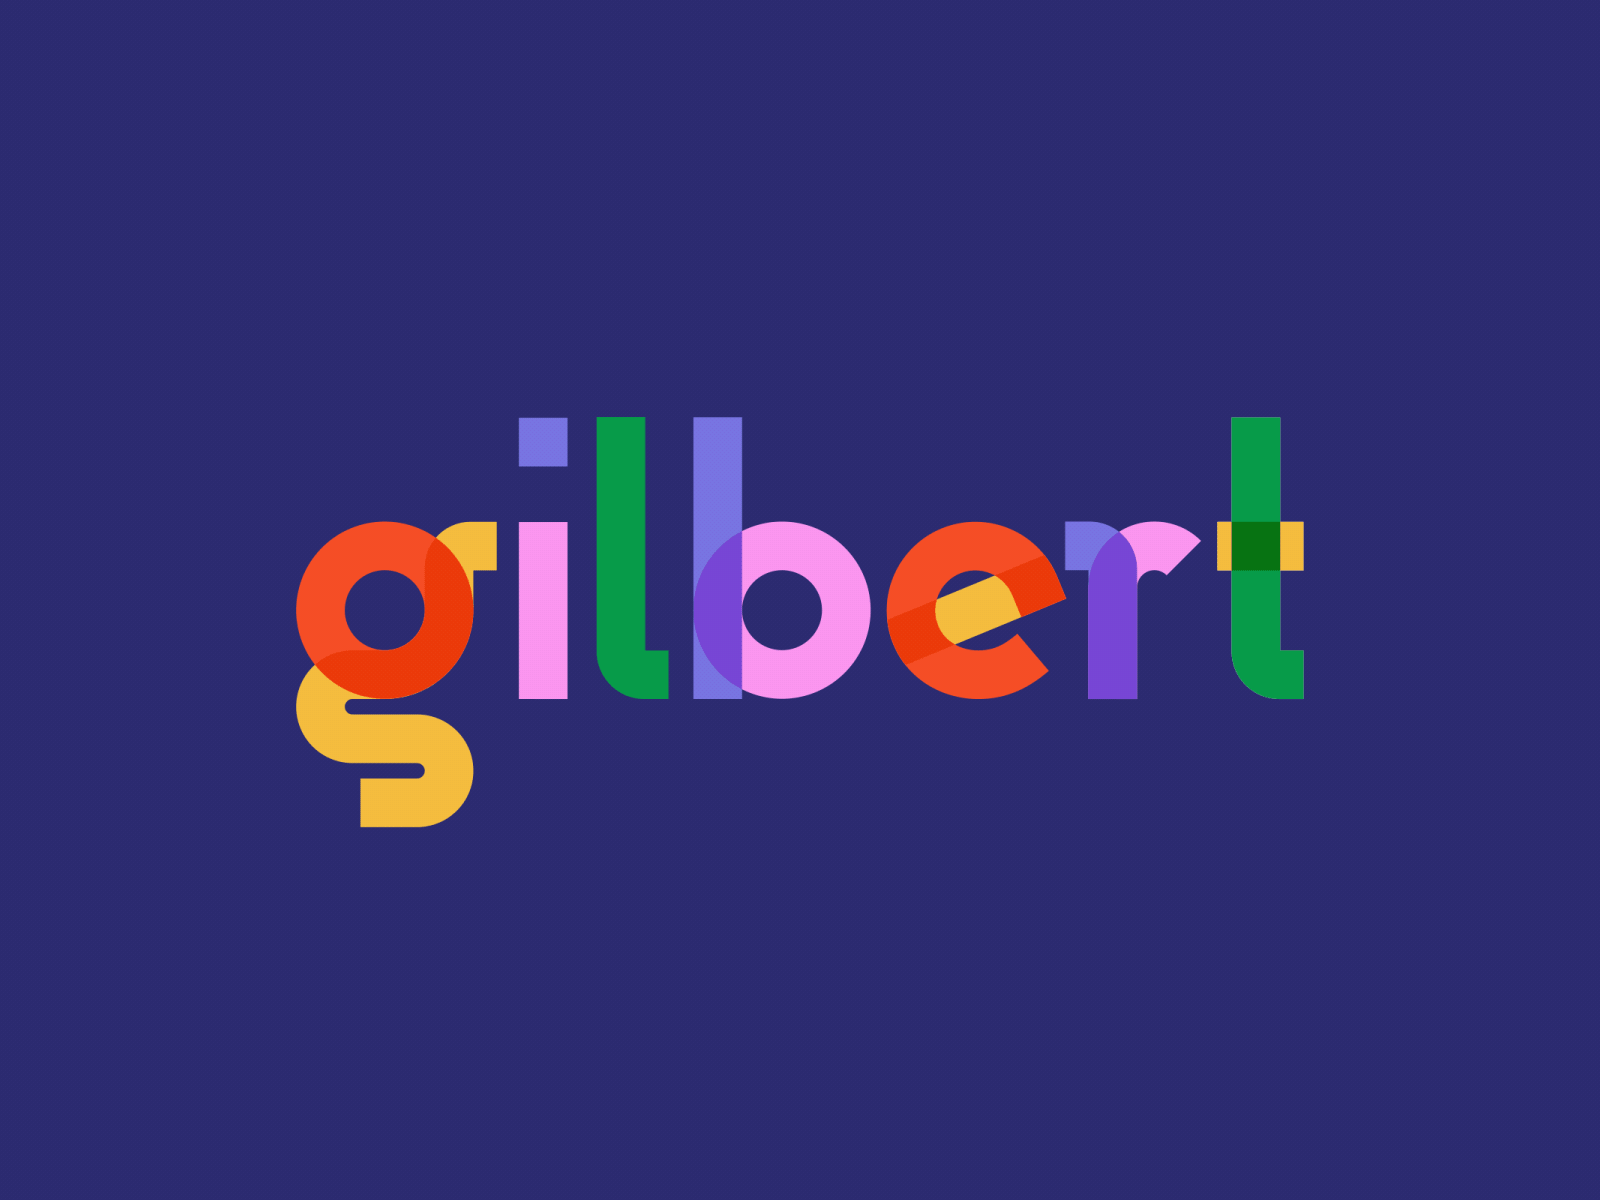 Gilbert - Animated Typeface